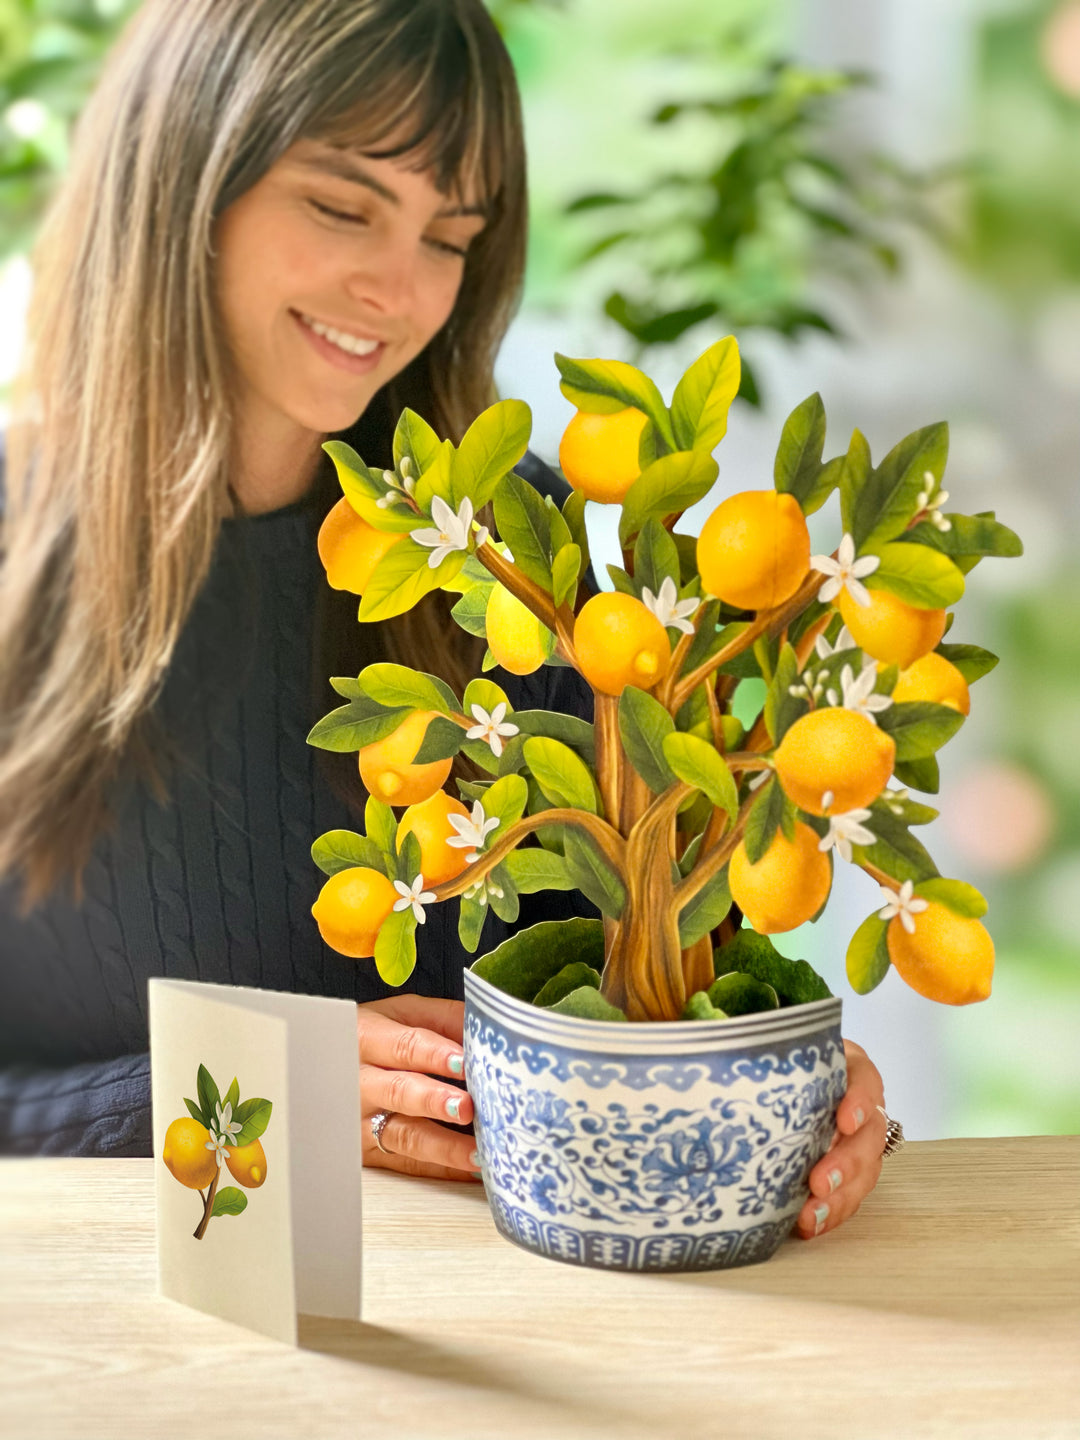 Pop Up Flower Bouquet Greeting Card - Lemon Tree